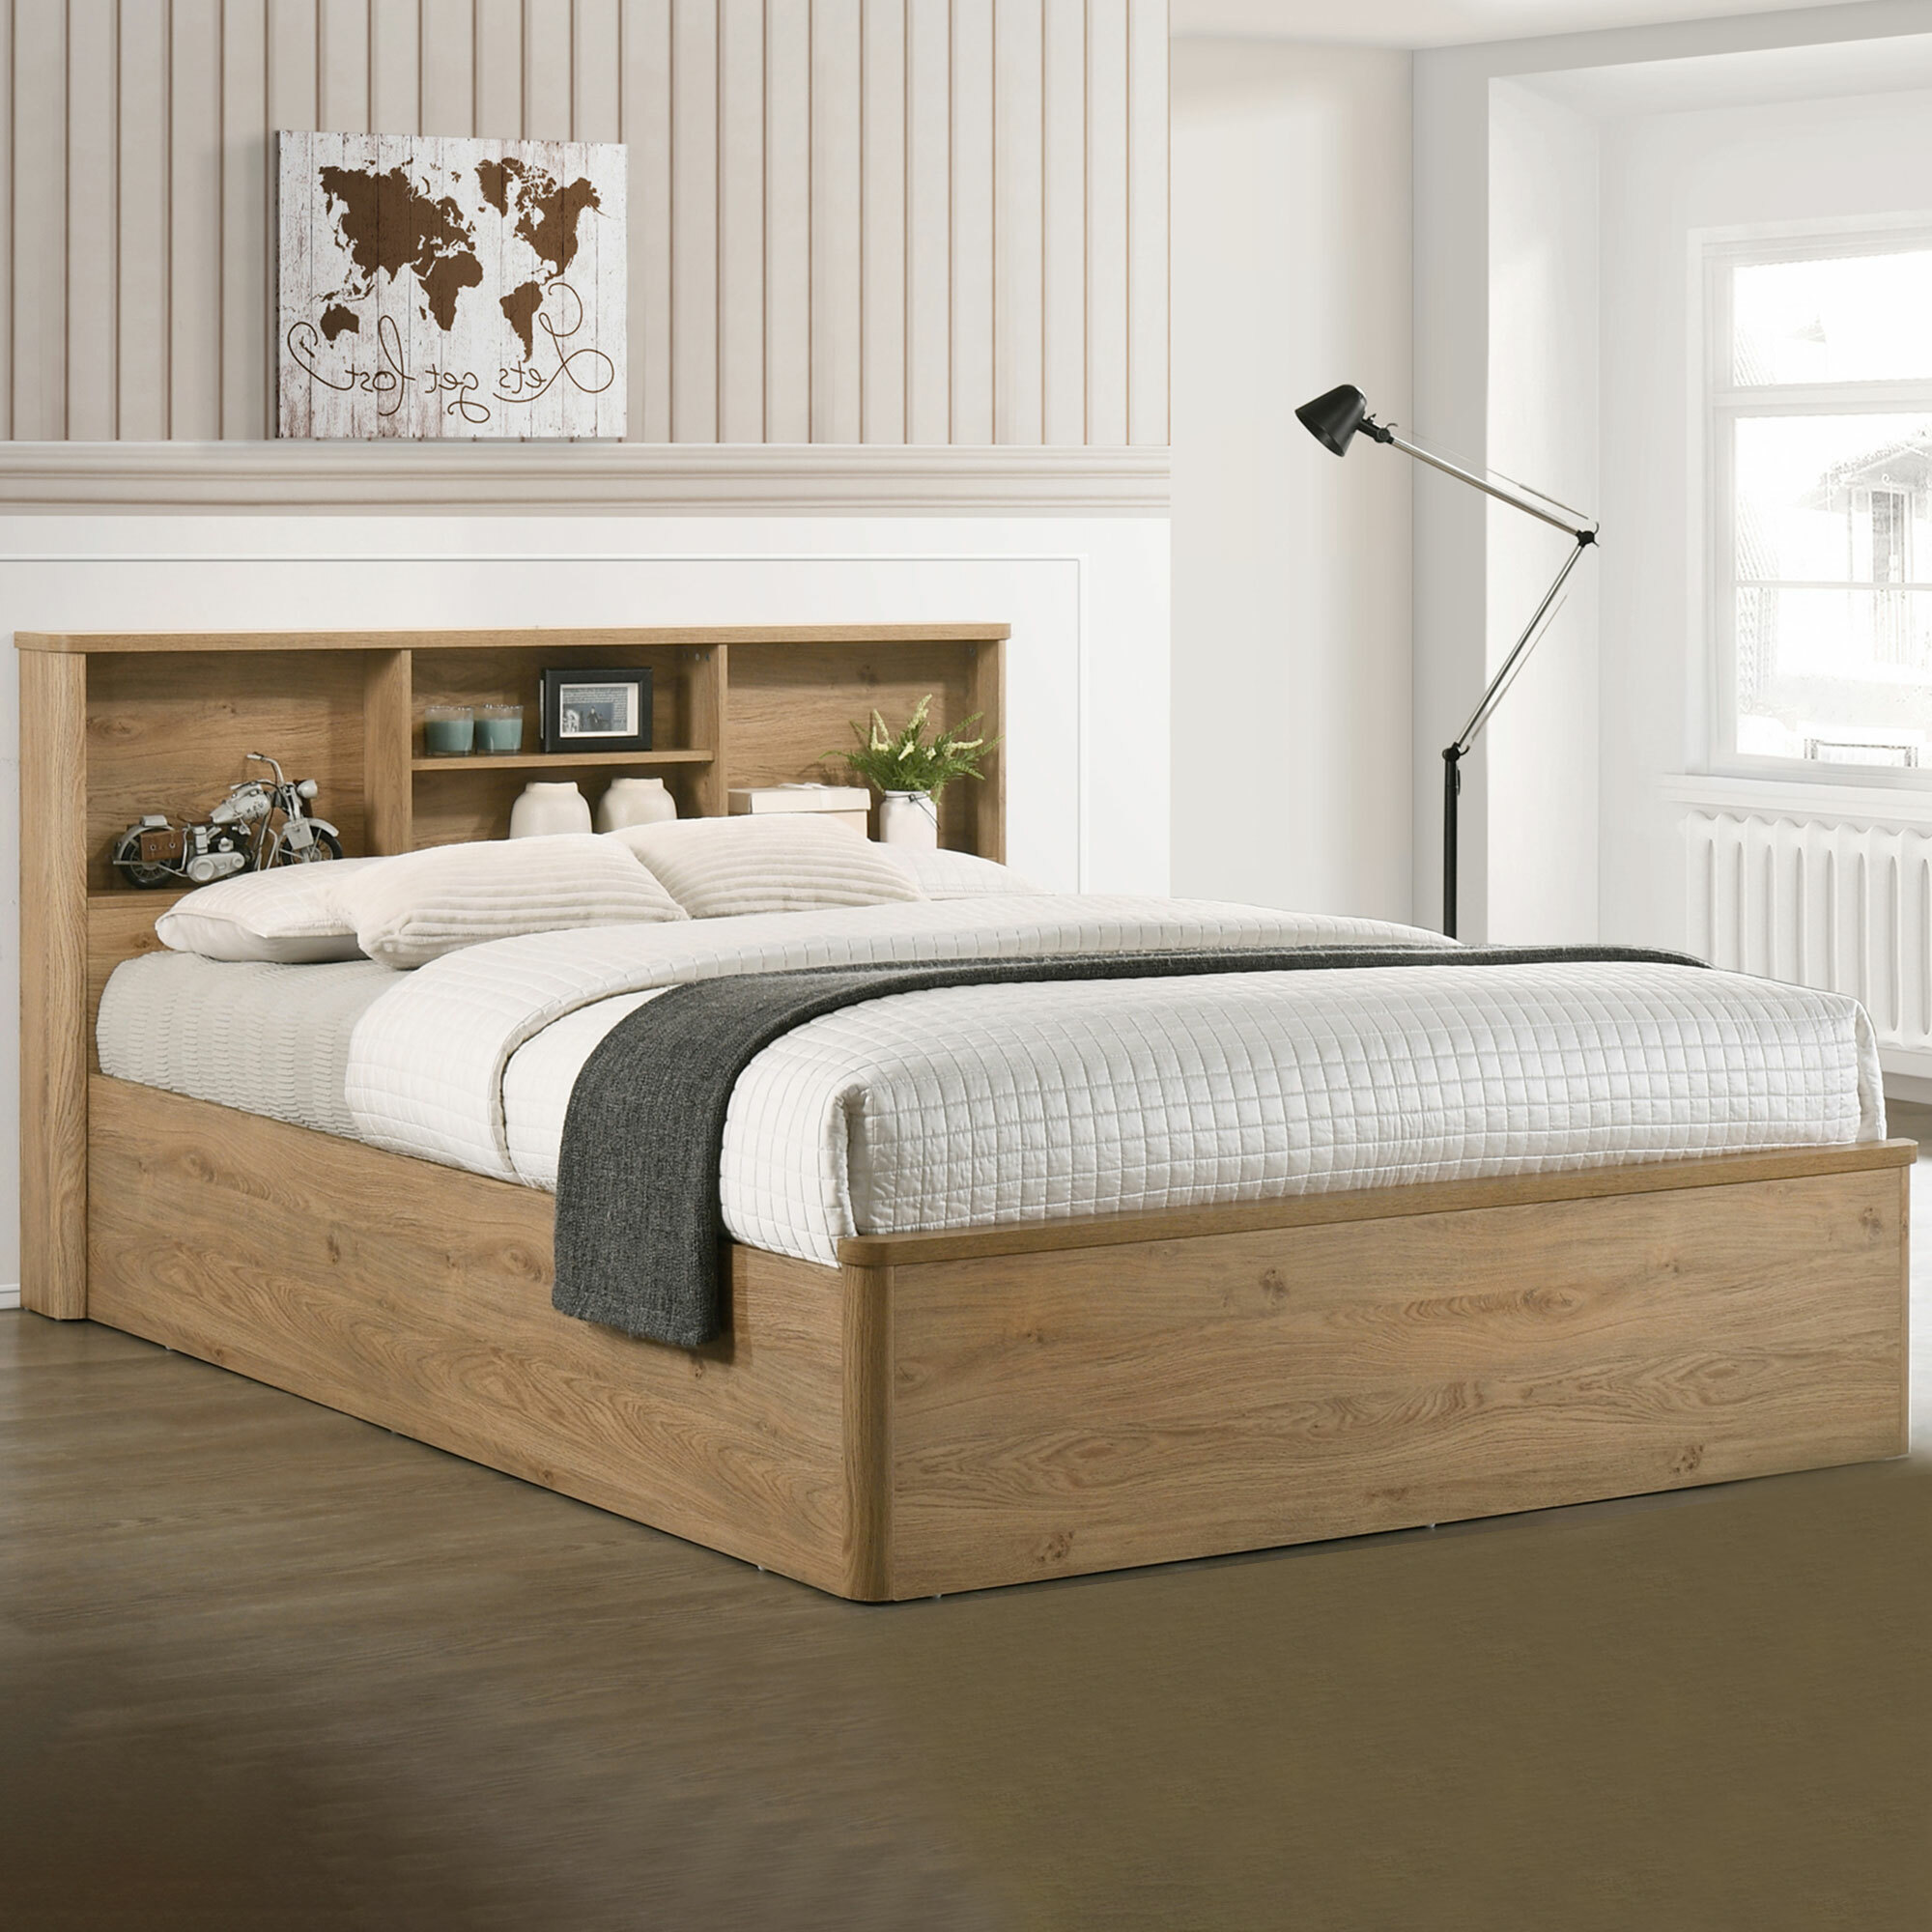 Core Living Natural Anderson Queen Bed, Oak Queen Size Bookcase Headboard